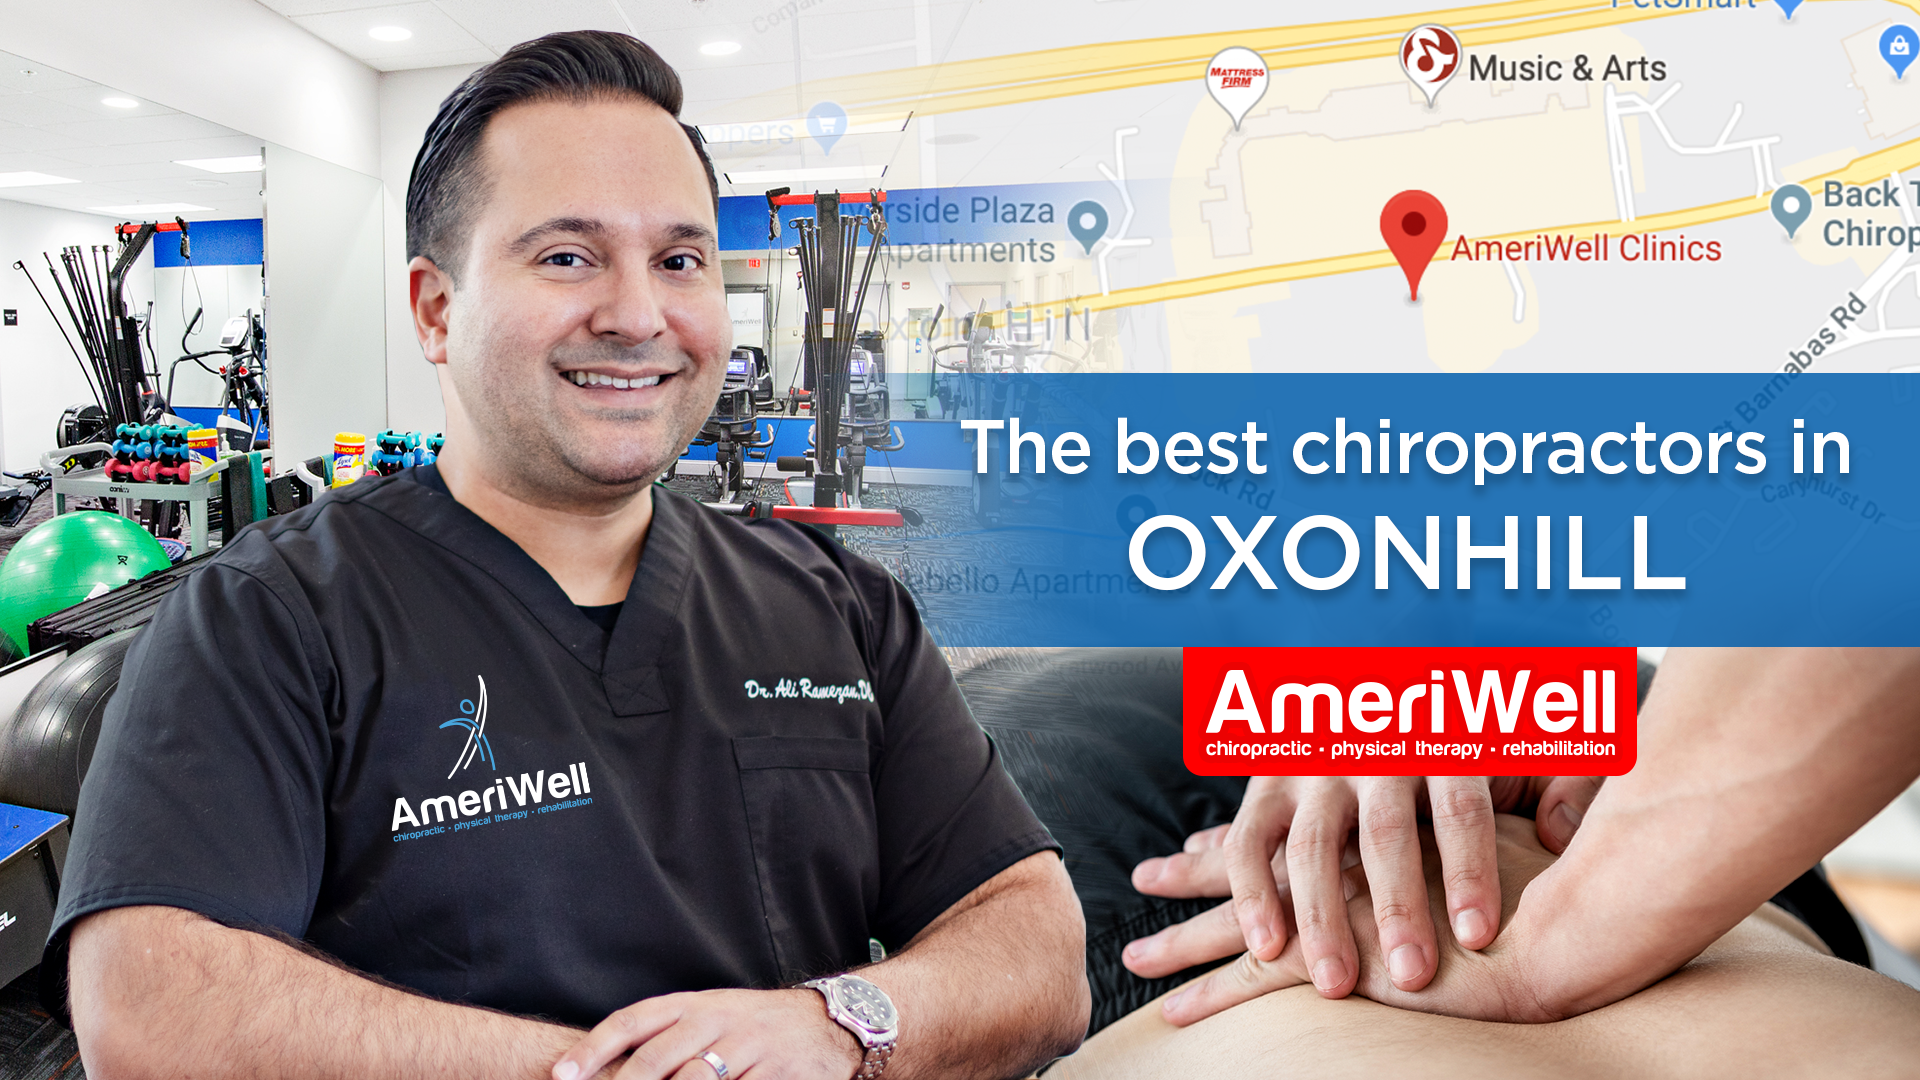 Oxon Hill – Ameriwell Clinics the best chiropractors